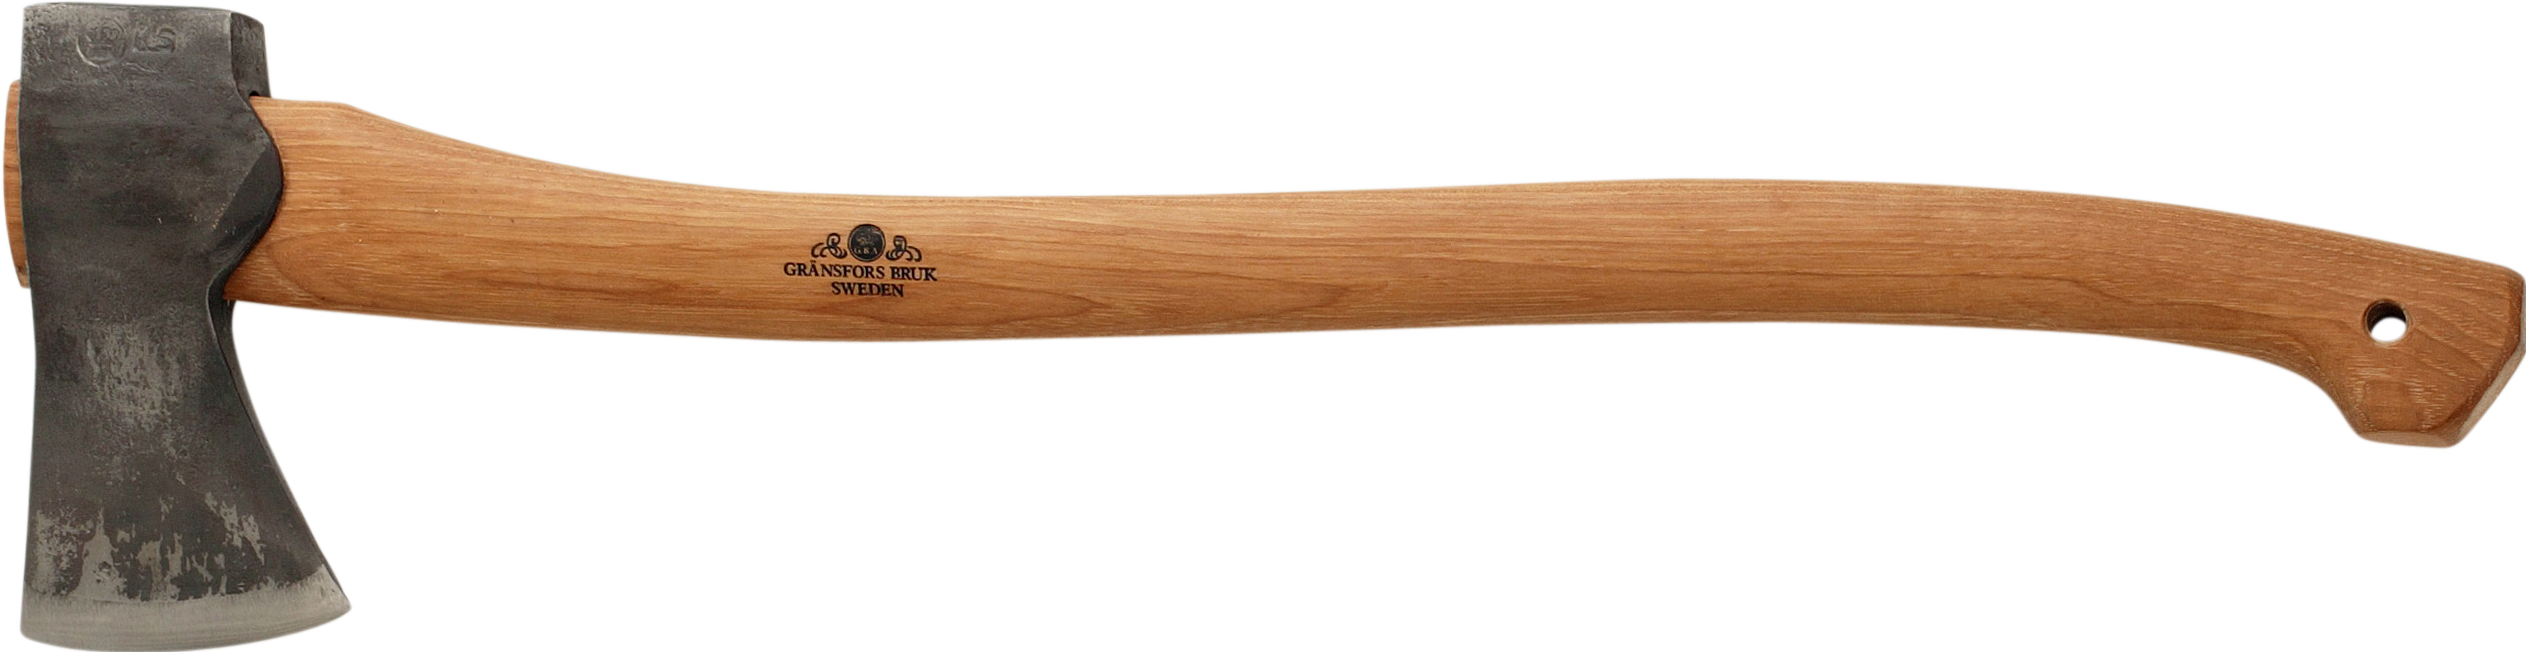 firewood clipart wood axe